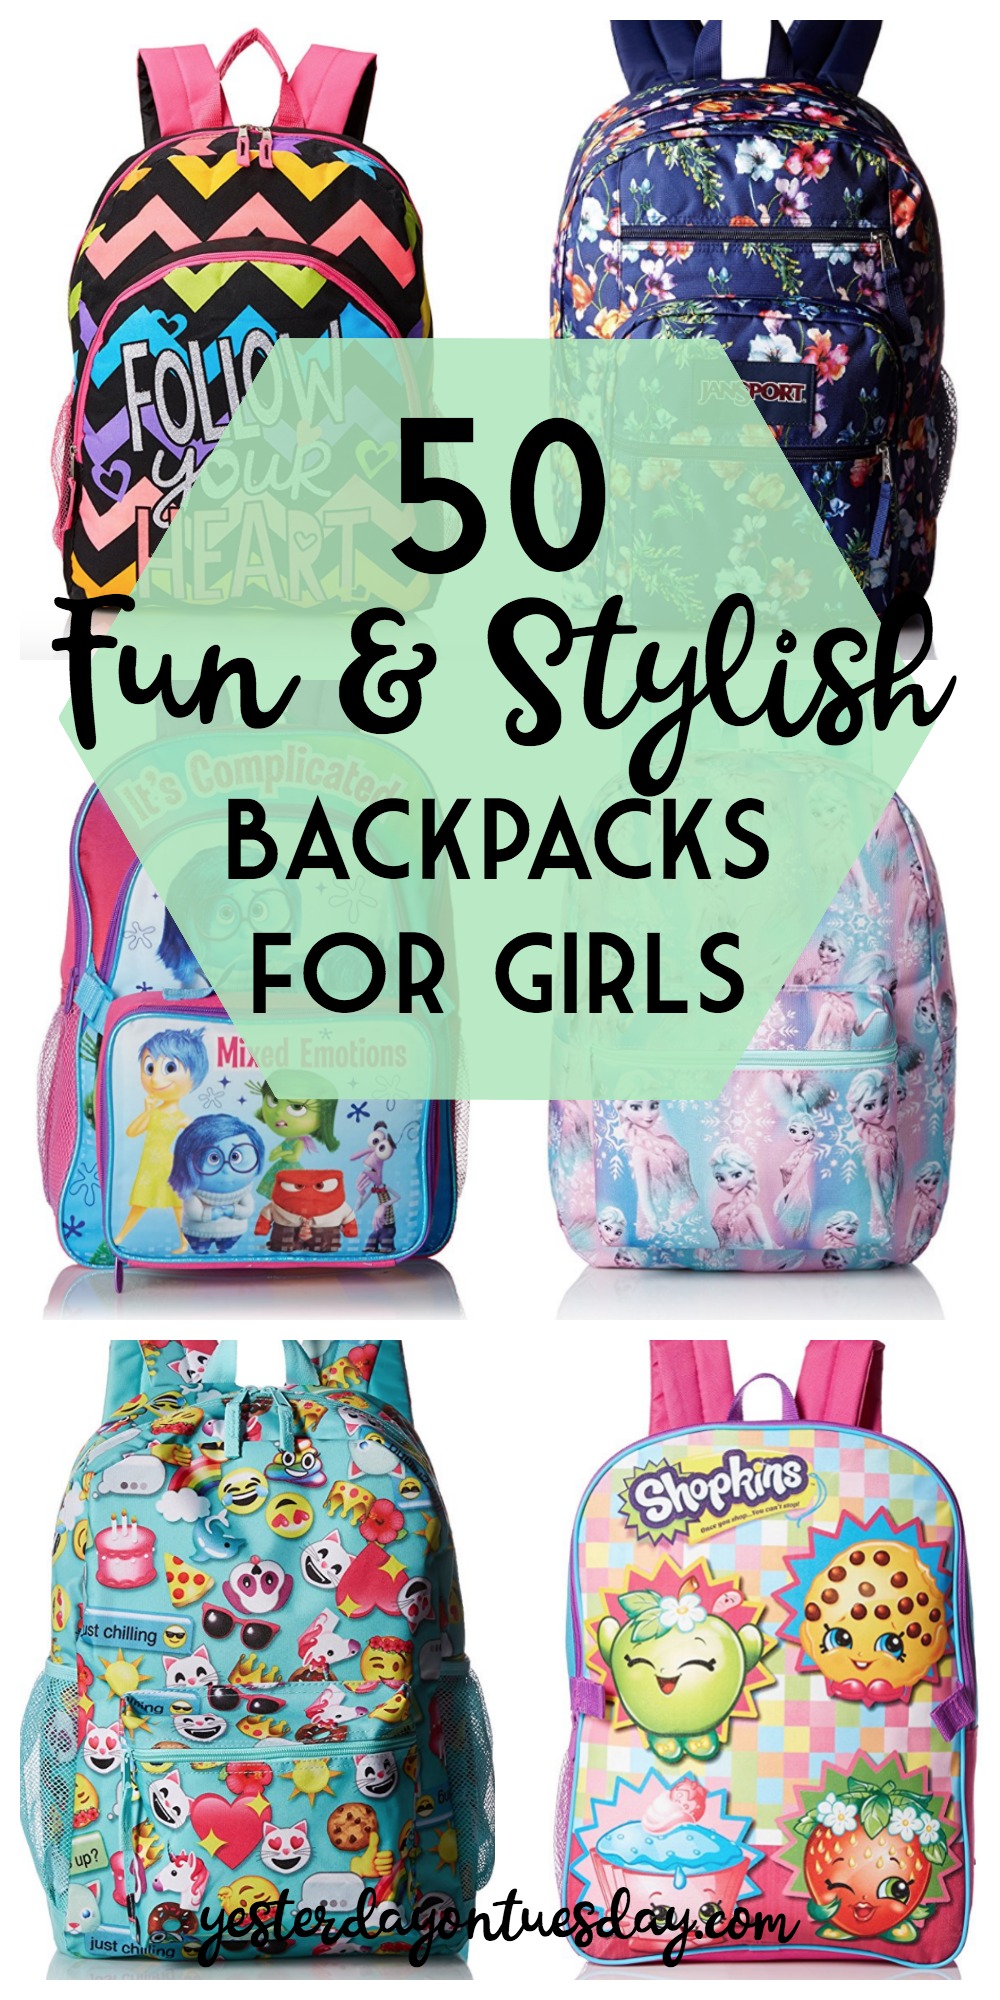 MGgear 19-Inch Girls School Book Backpack w/Hearts & Butterflies Print Pink